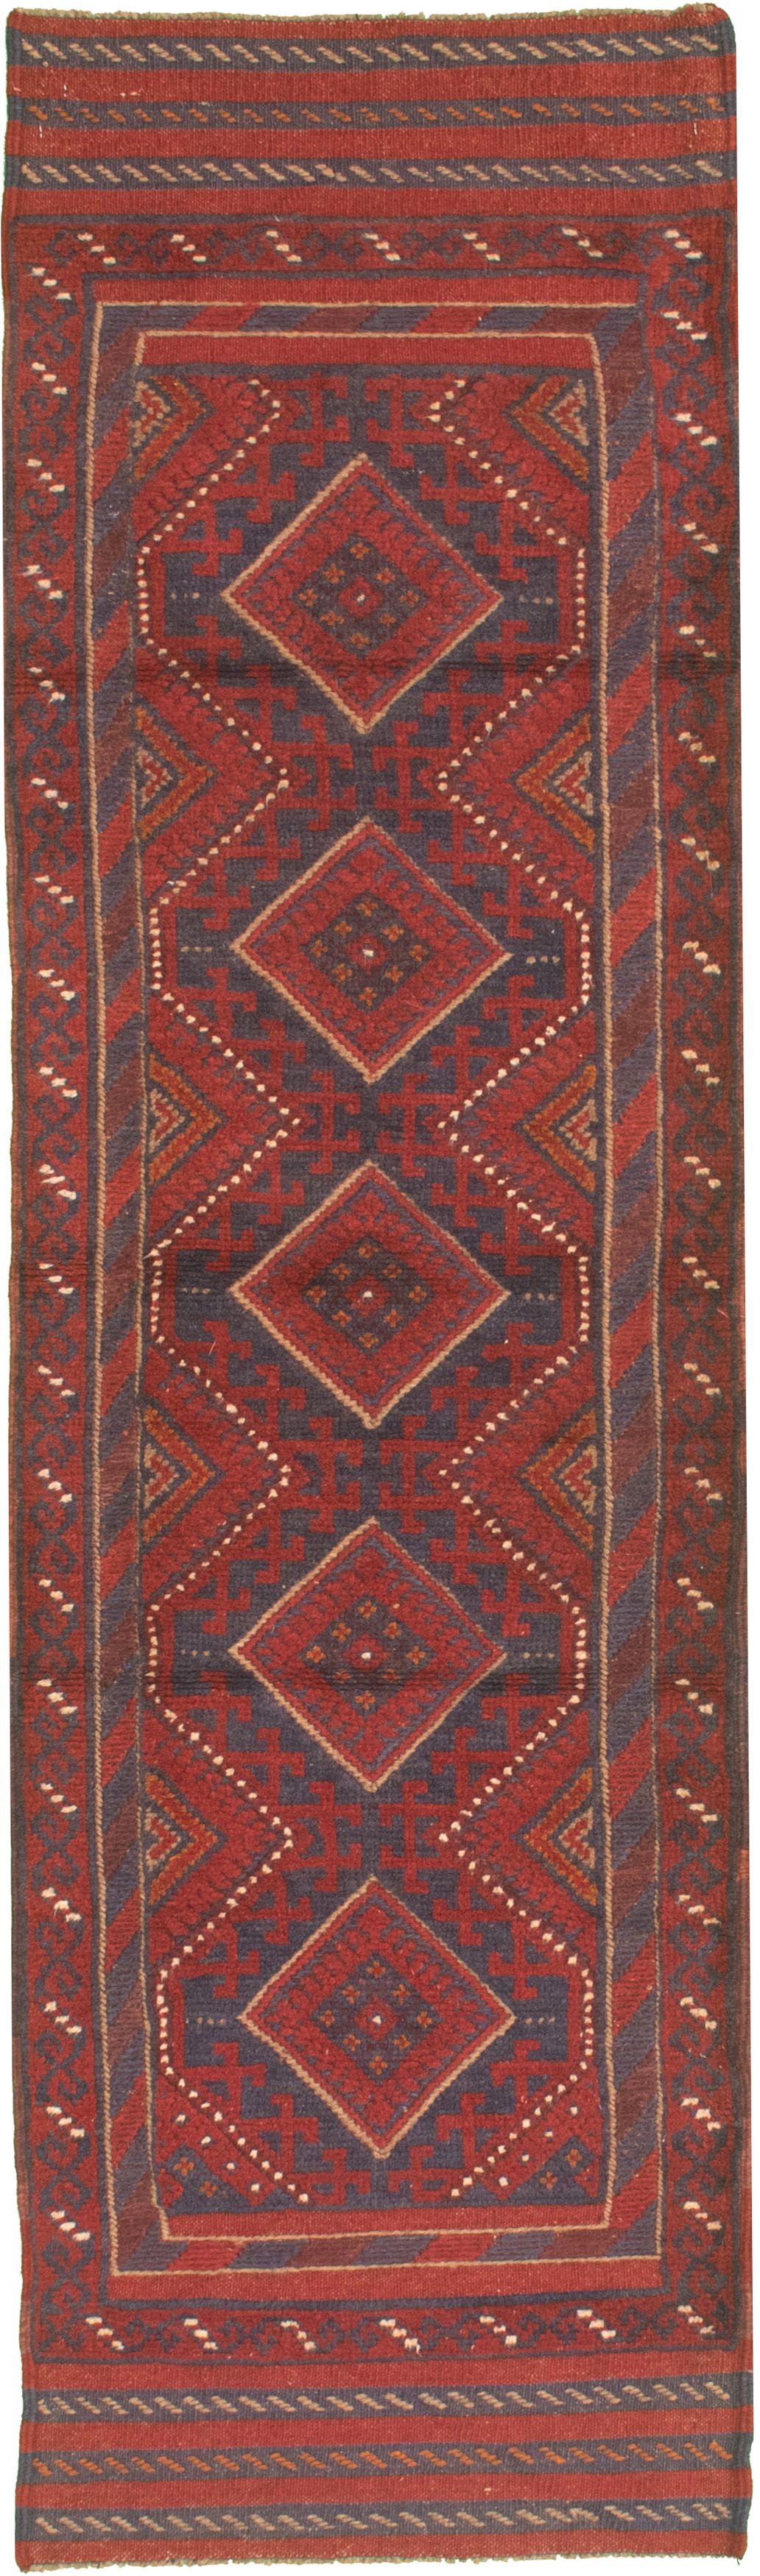 Hand-knotted Tajik Caucasian Red Wool Rug 2'2" x 8'2"  Size: 2'2" x 8'2"  